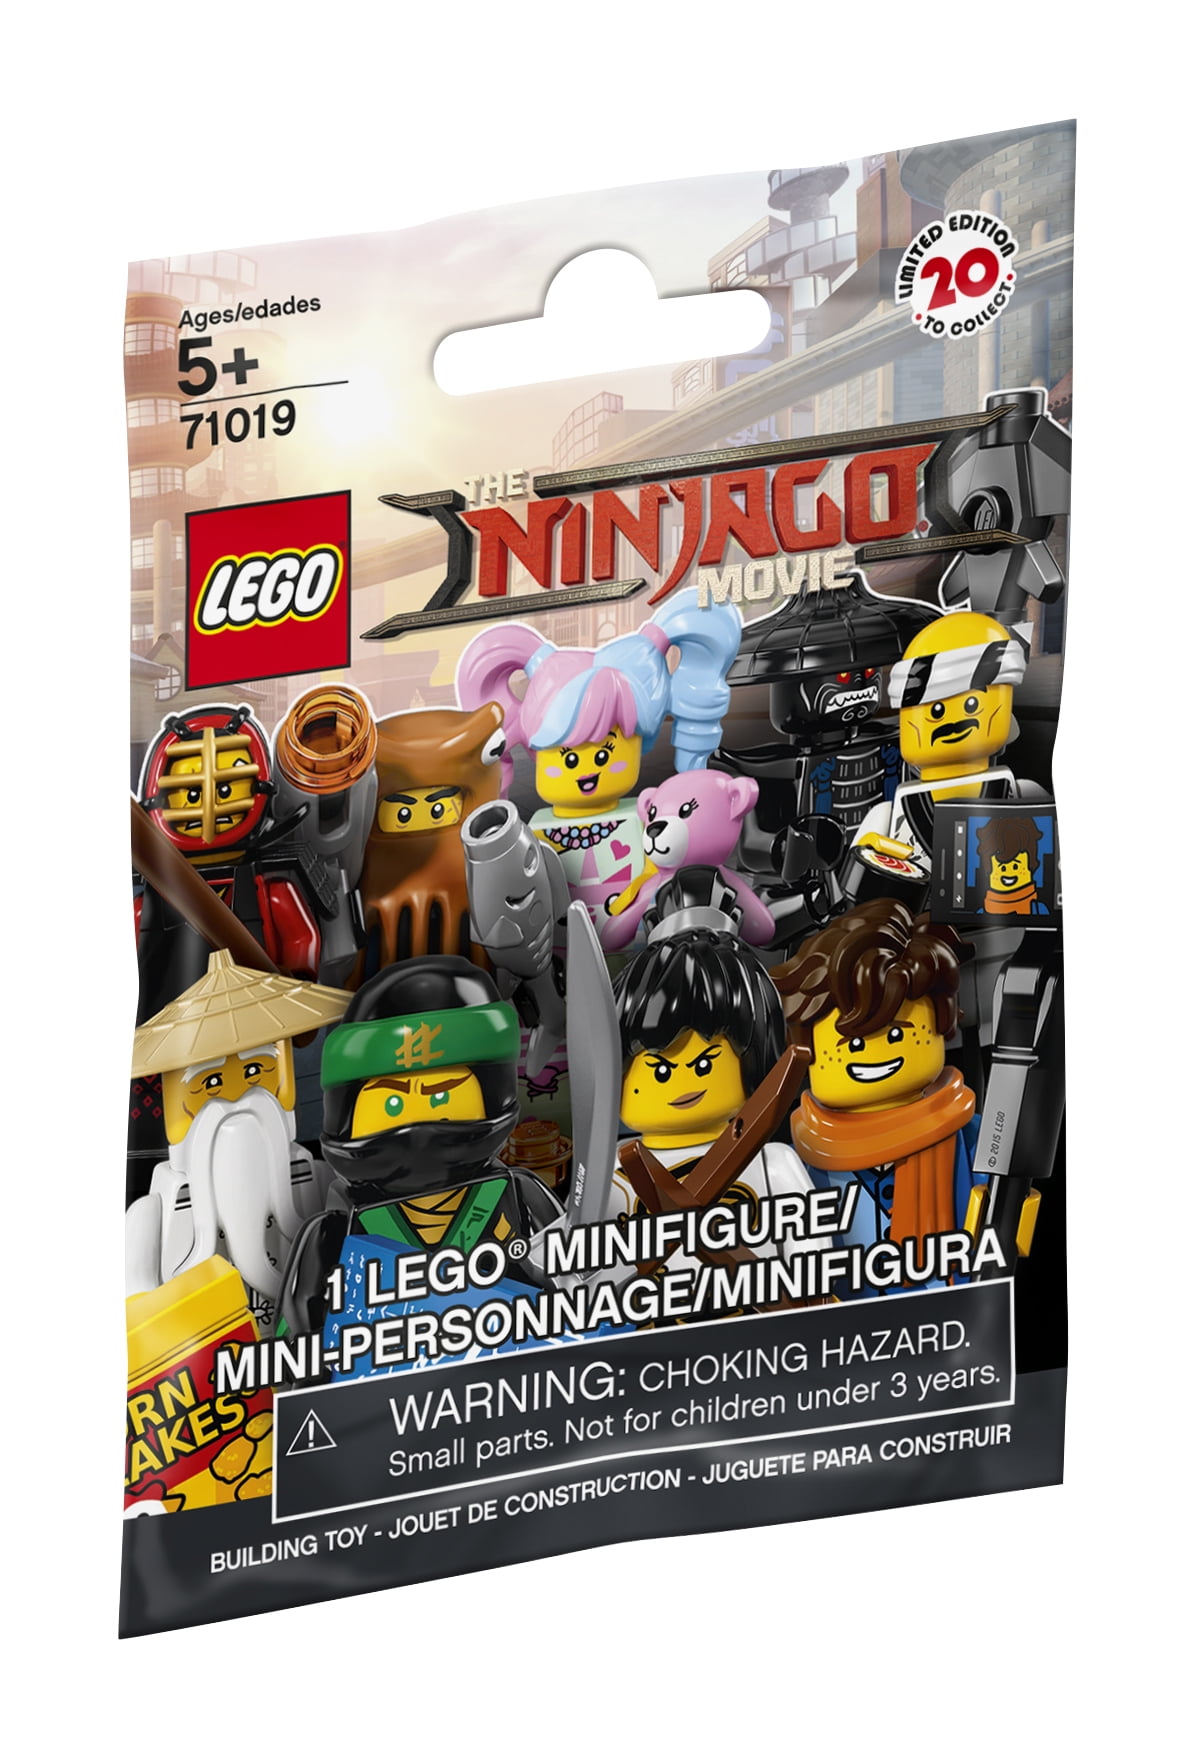 Lego 71019 Ninjago Movie Minifigure MISB Limited Collector Series Minifigs